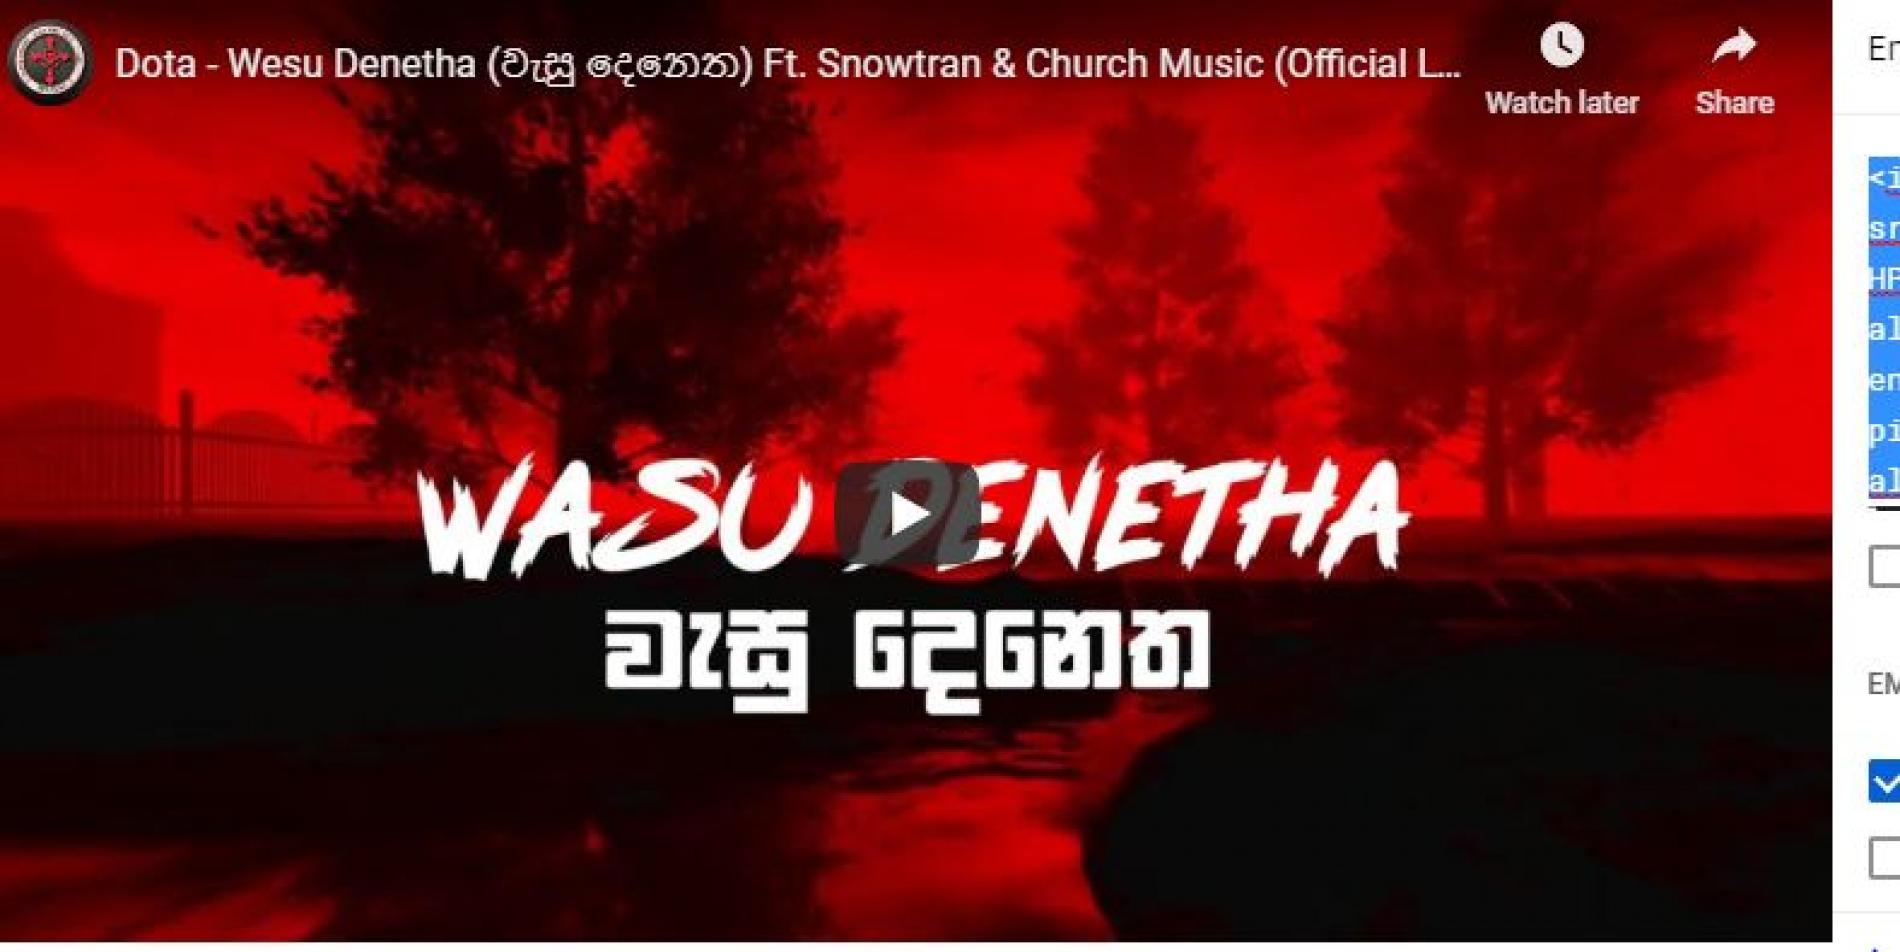 Dota – Wesu Denetha (වැසු දෙනෙත) Ft Snowtran & Church Music (Official Lyrics Video)